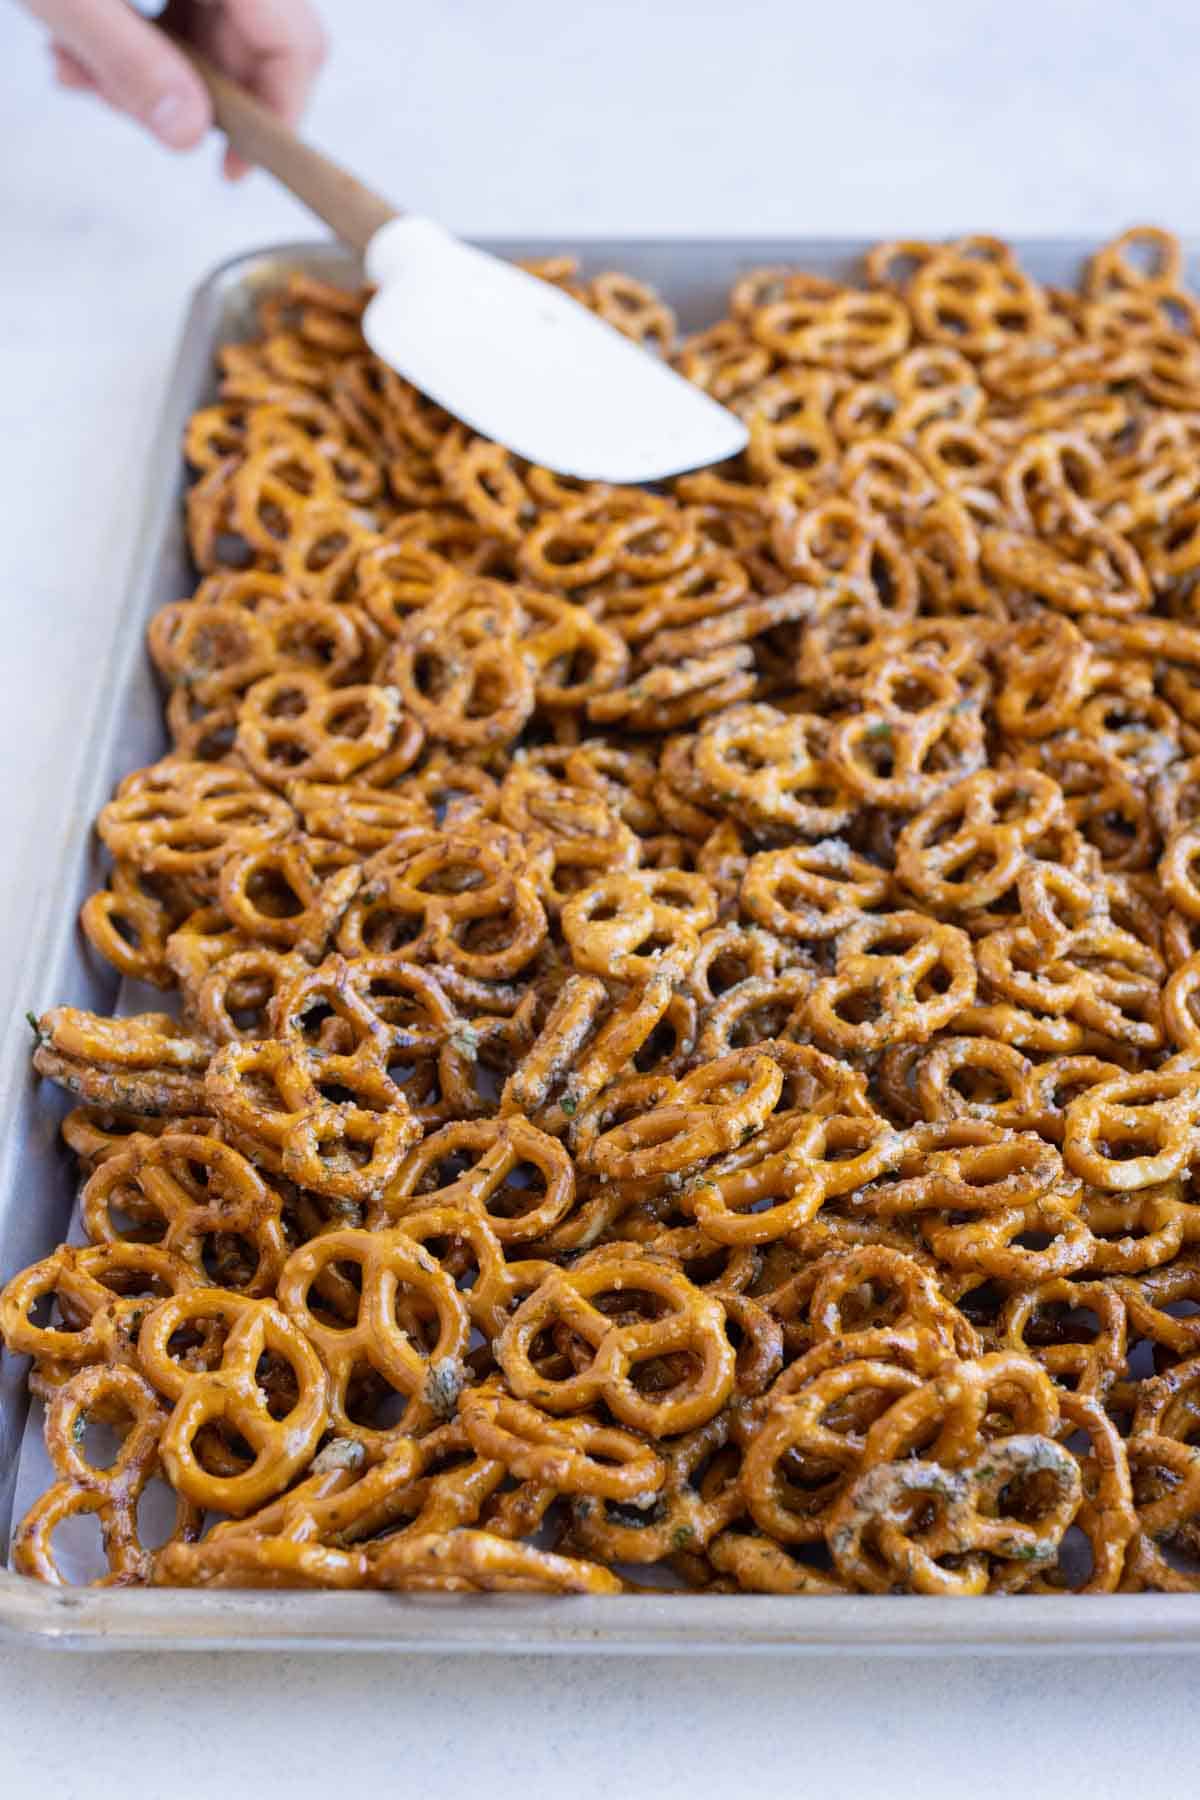 A spatula spreads out seasoned pretzels on a baking sheet.